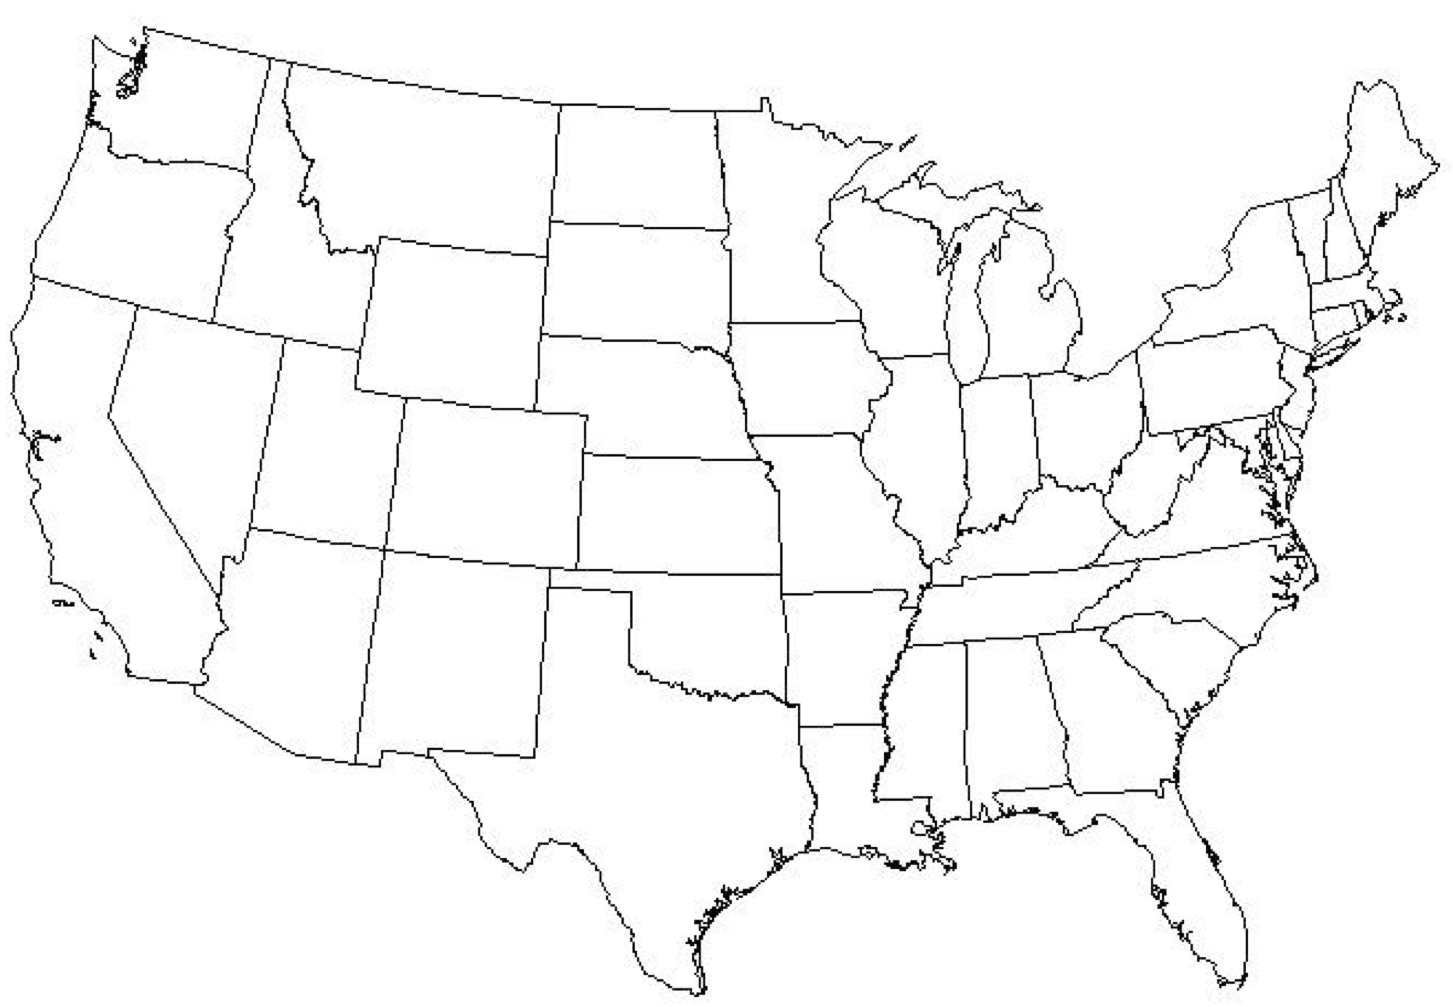 google-blank-map-of-united-states